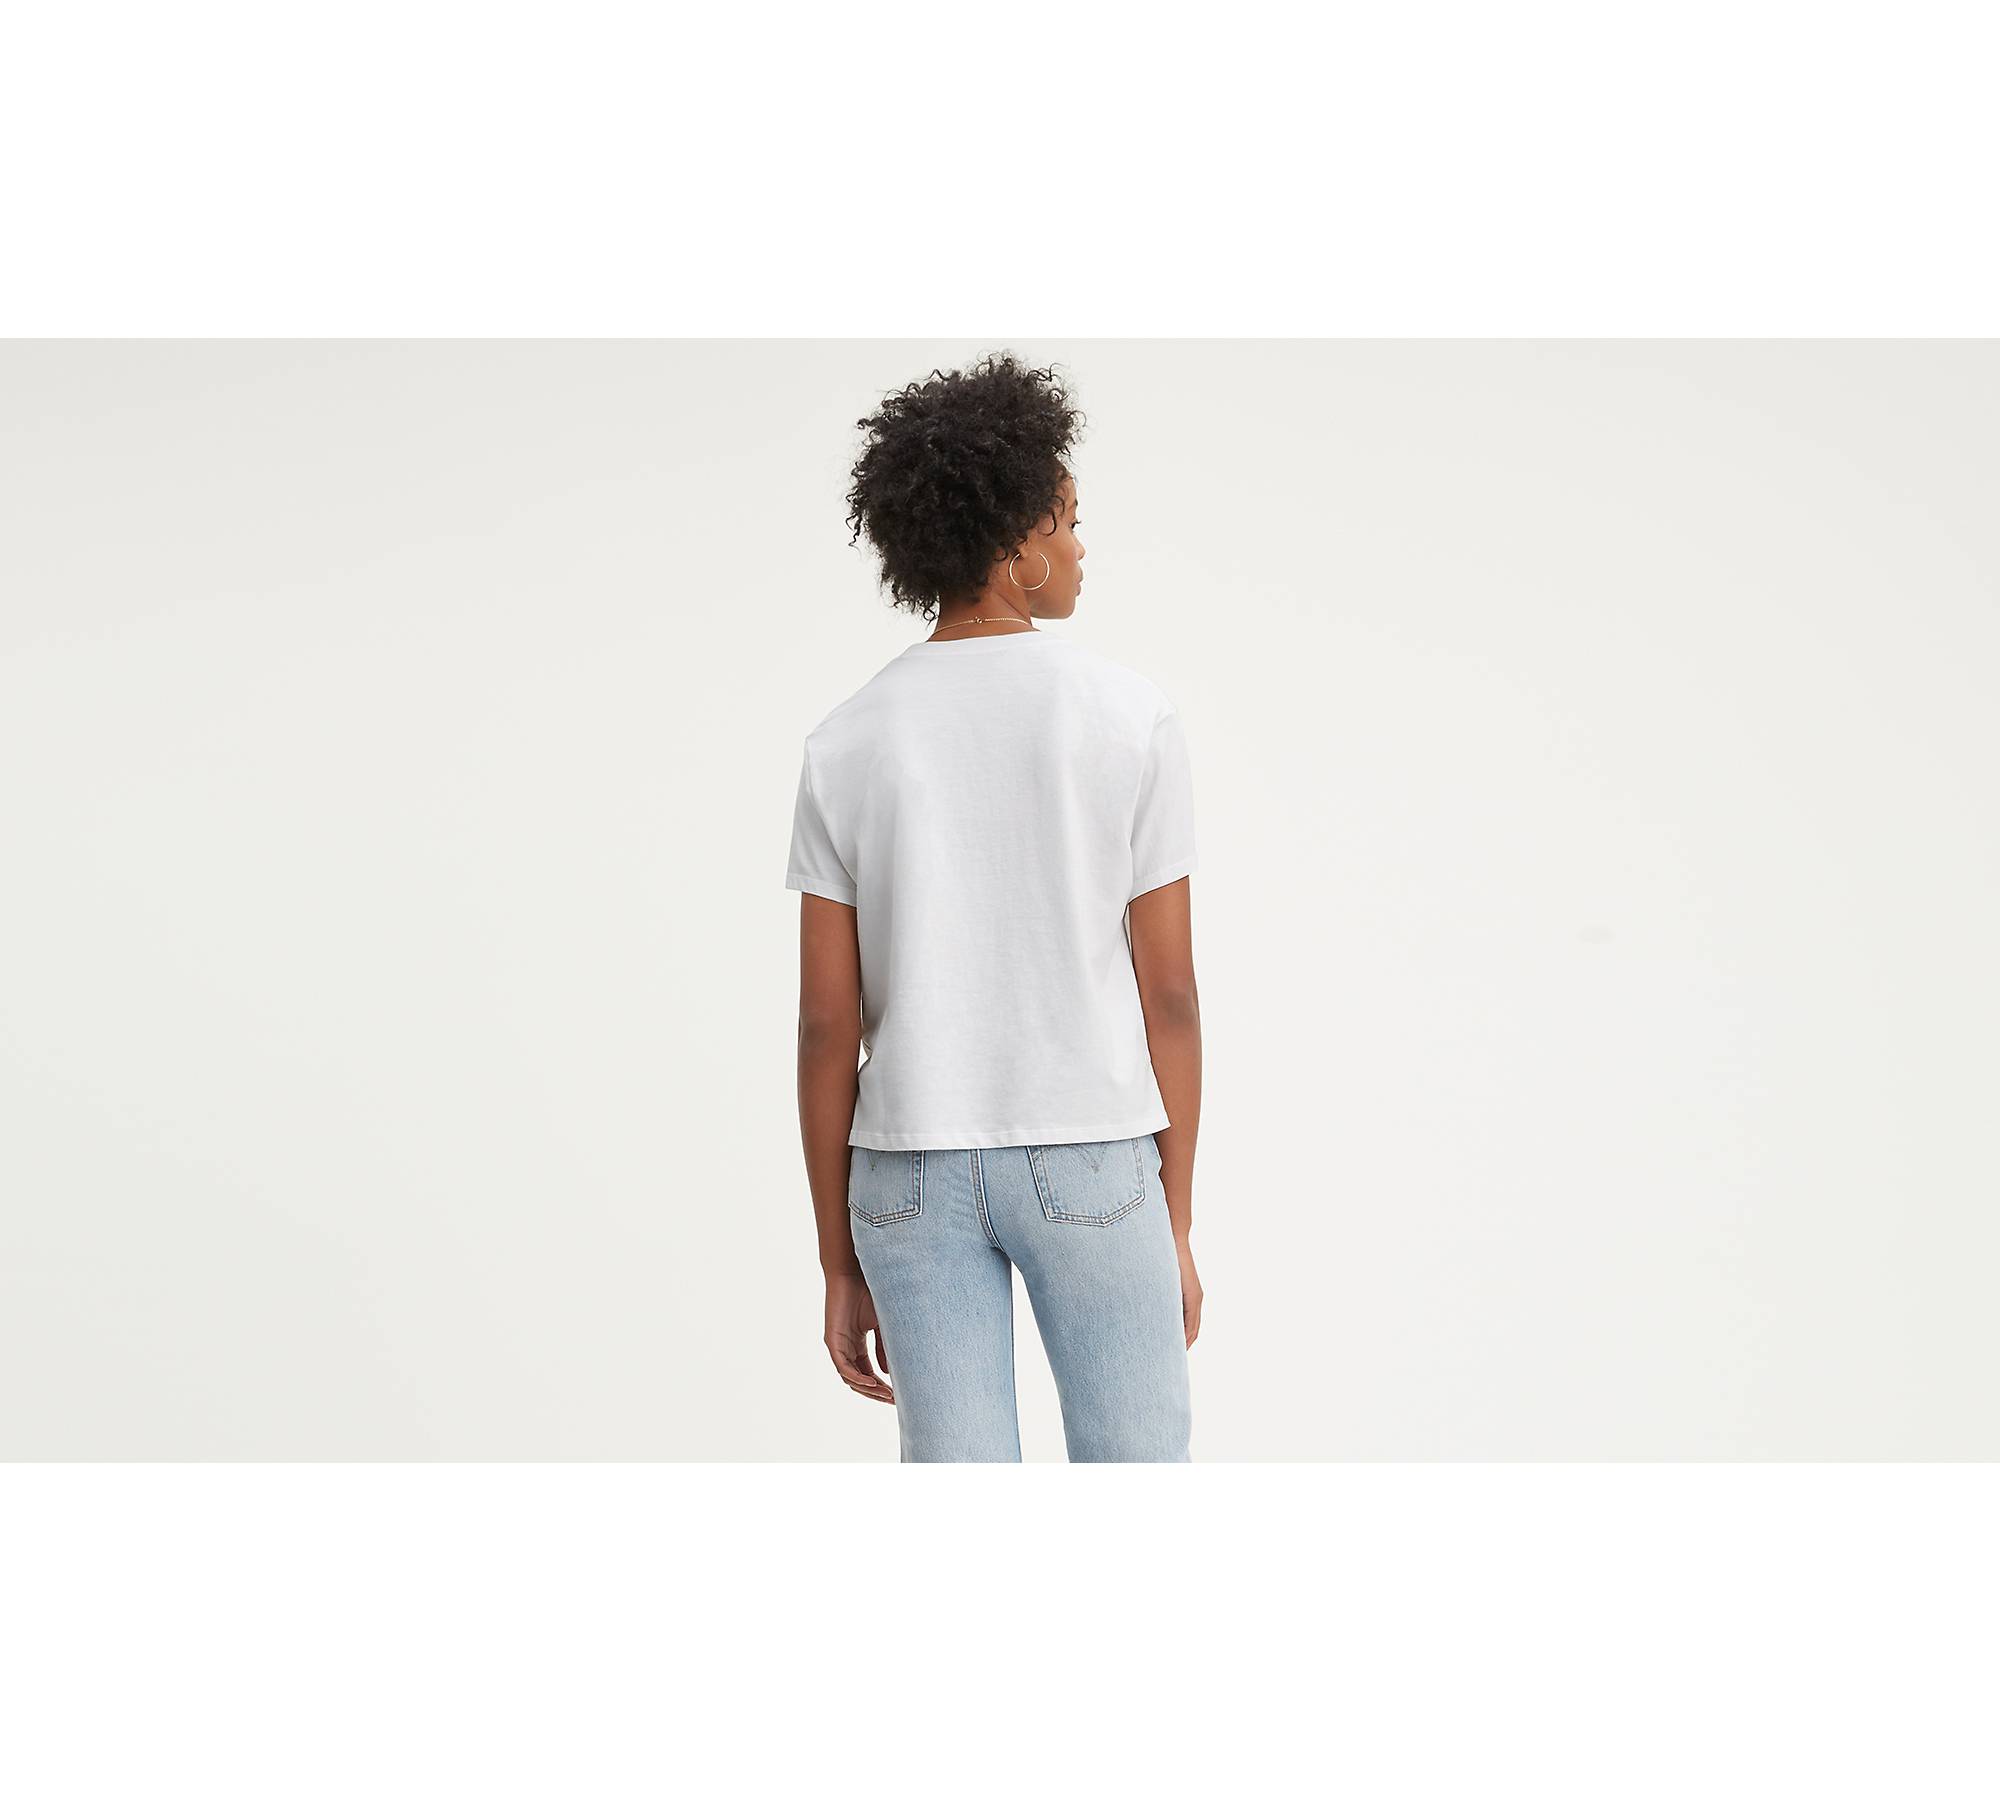 Buy LovinoForm NEVA Seamless T-Shirt Bra (C, White, 30) at